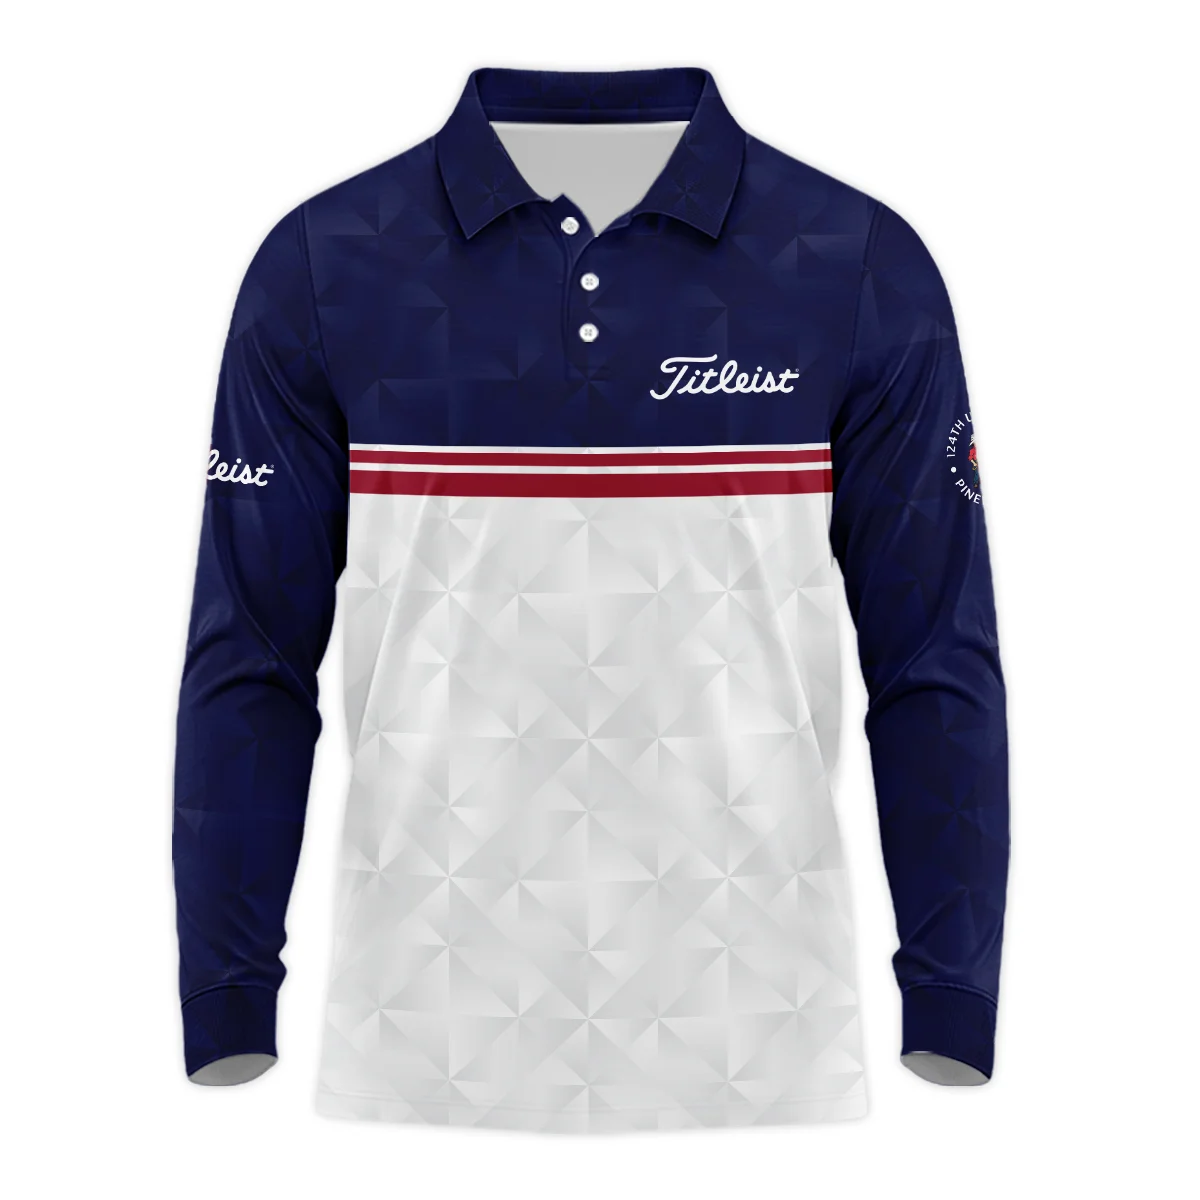 Golf Sport 124th U.S. Open Pinehurst Titleist Quarter-Zip Jacket Dark Blue White Abstract Geometric Triangles All Over Print Quarter-Zip Jacket